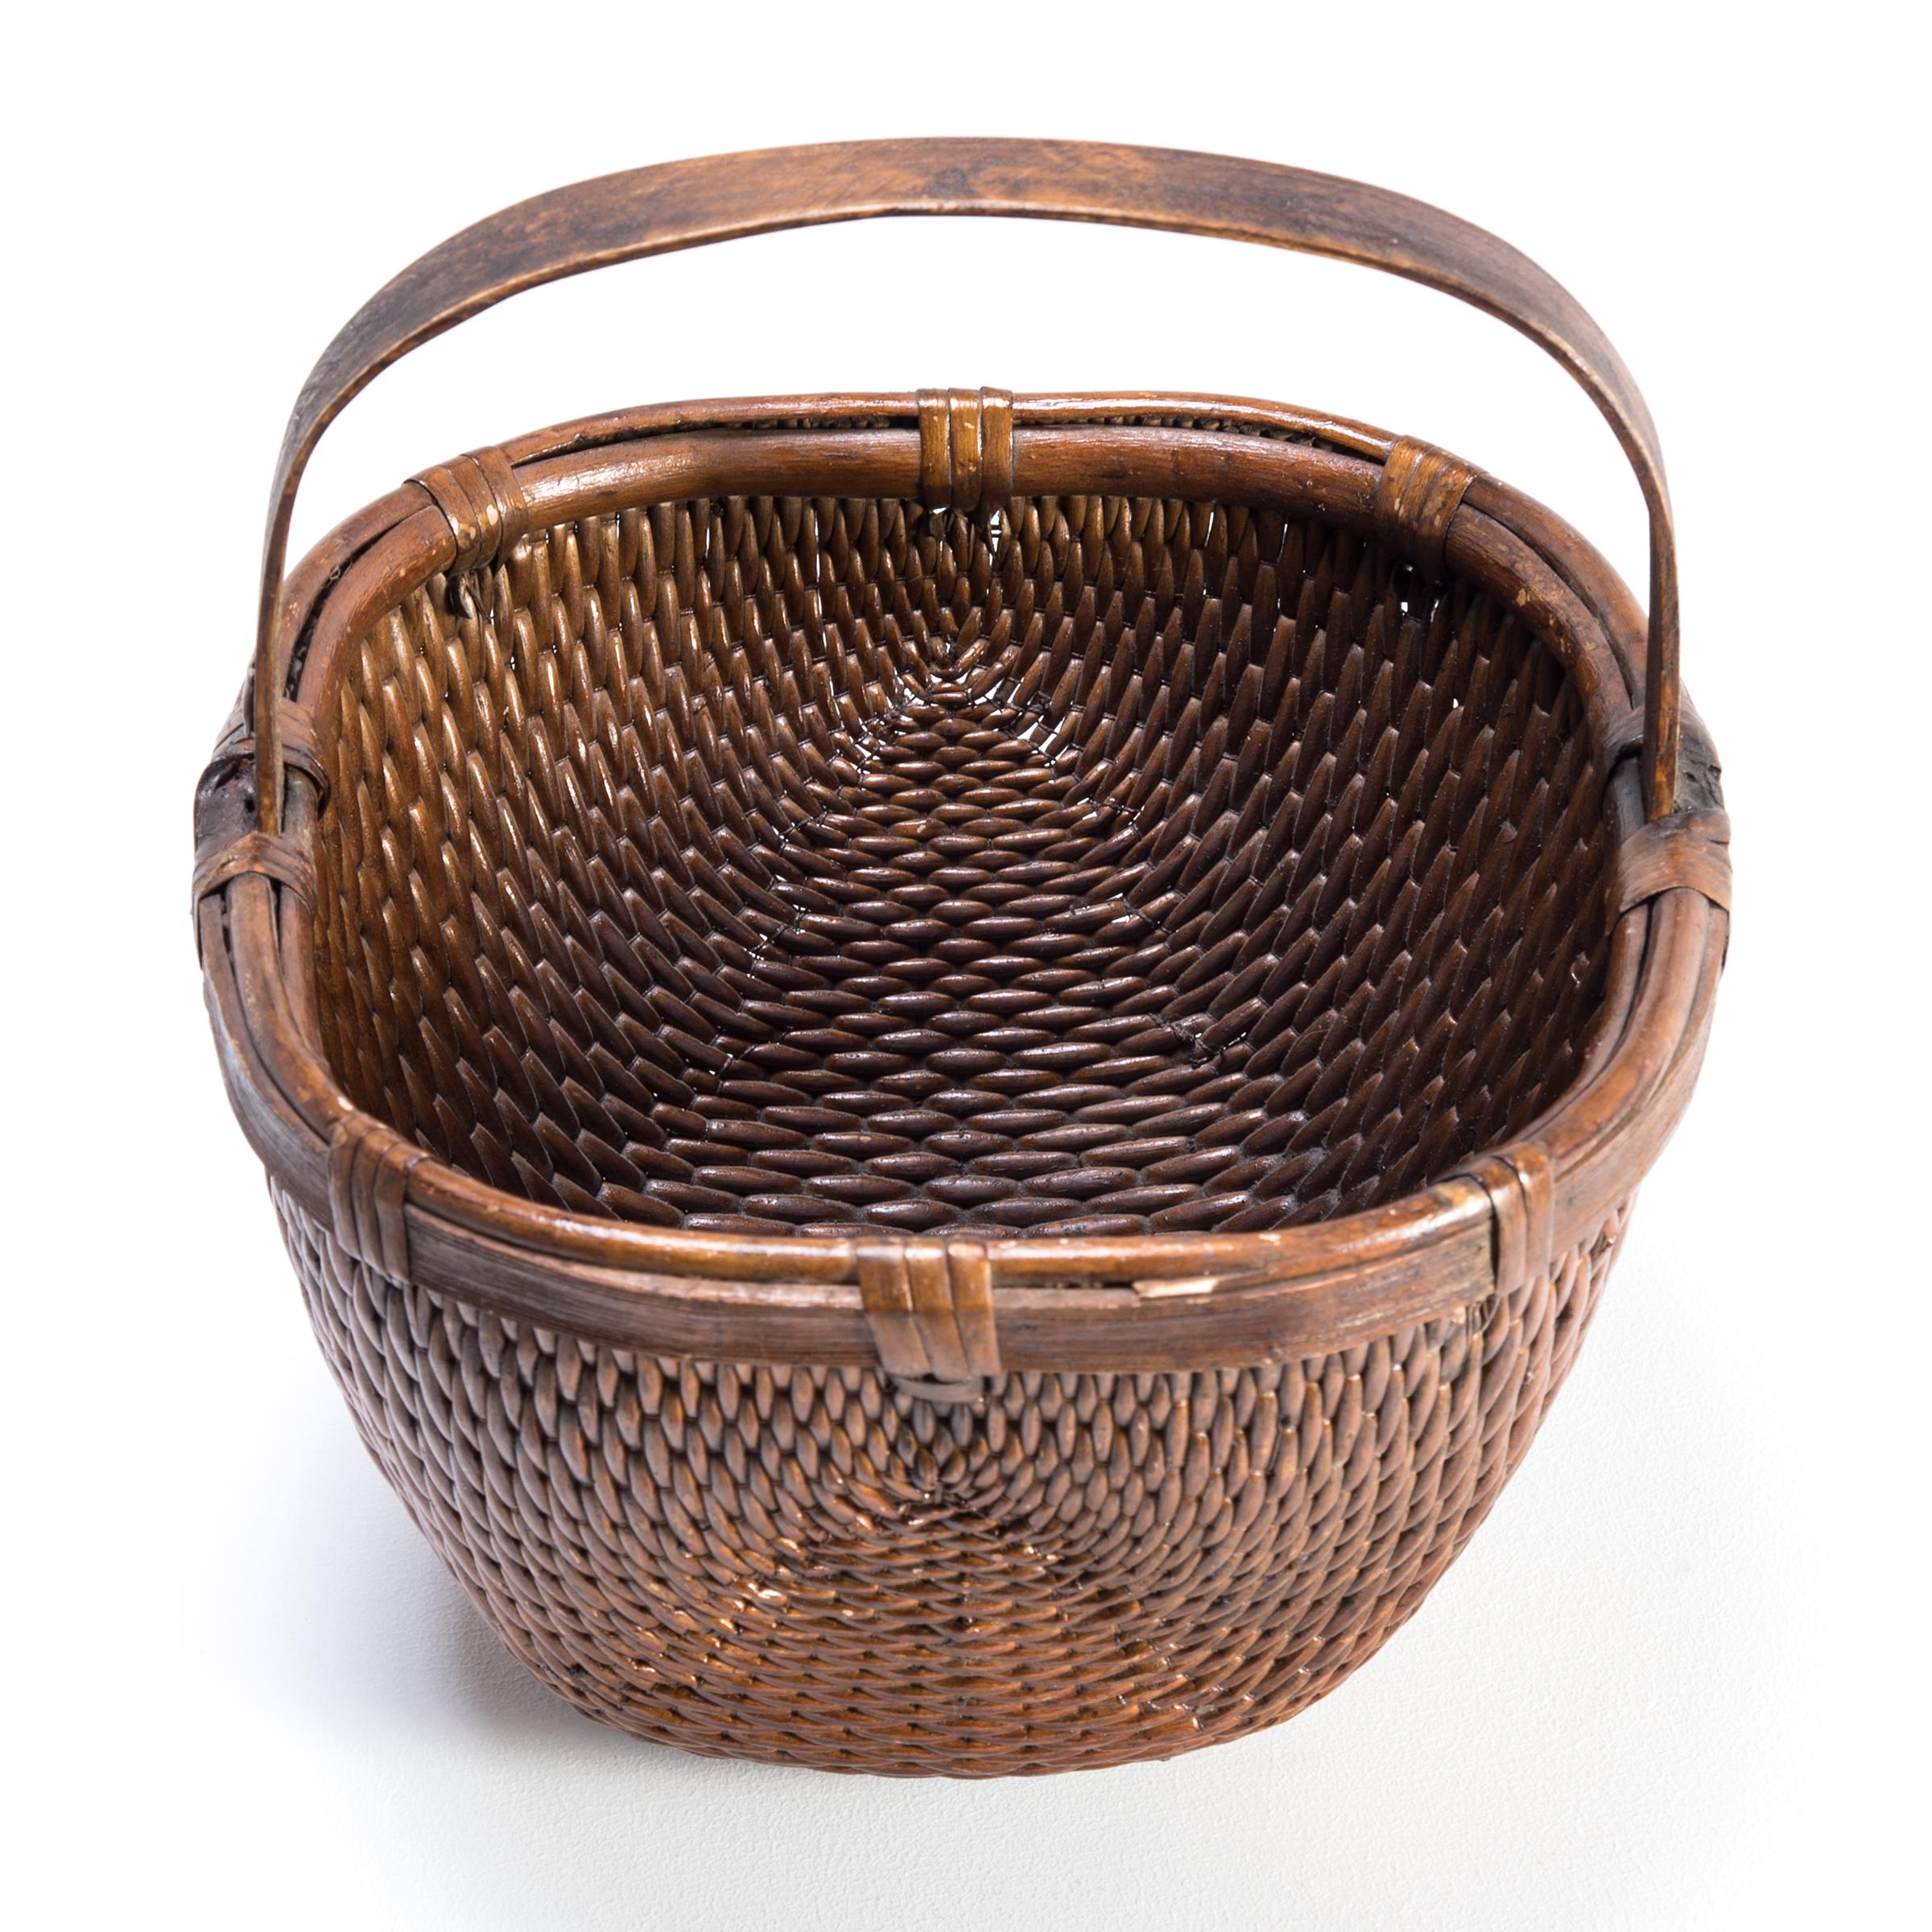 20th Century Chinese Willow Market Basket, circa 1900